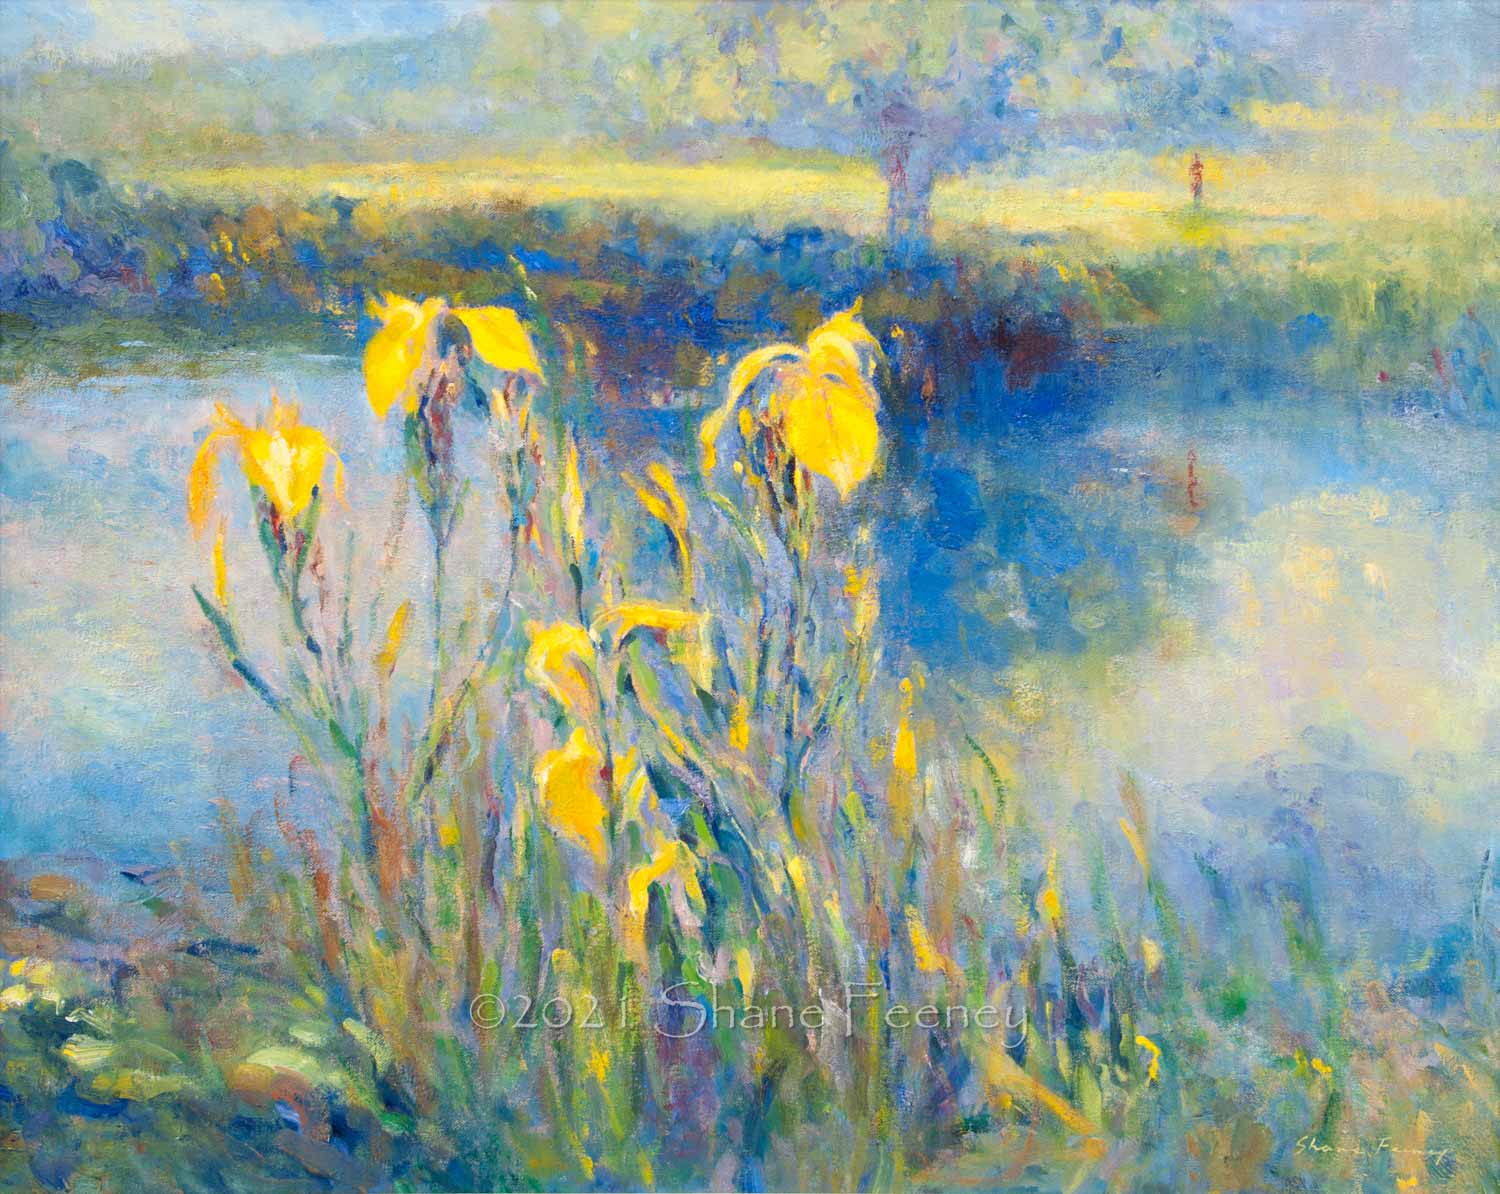 Yellow Iris by the River Avon